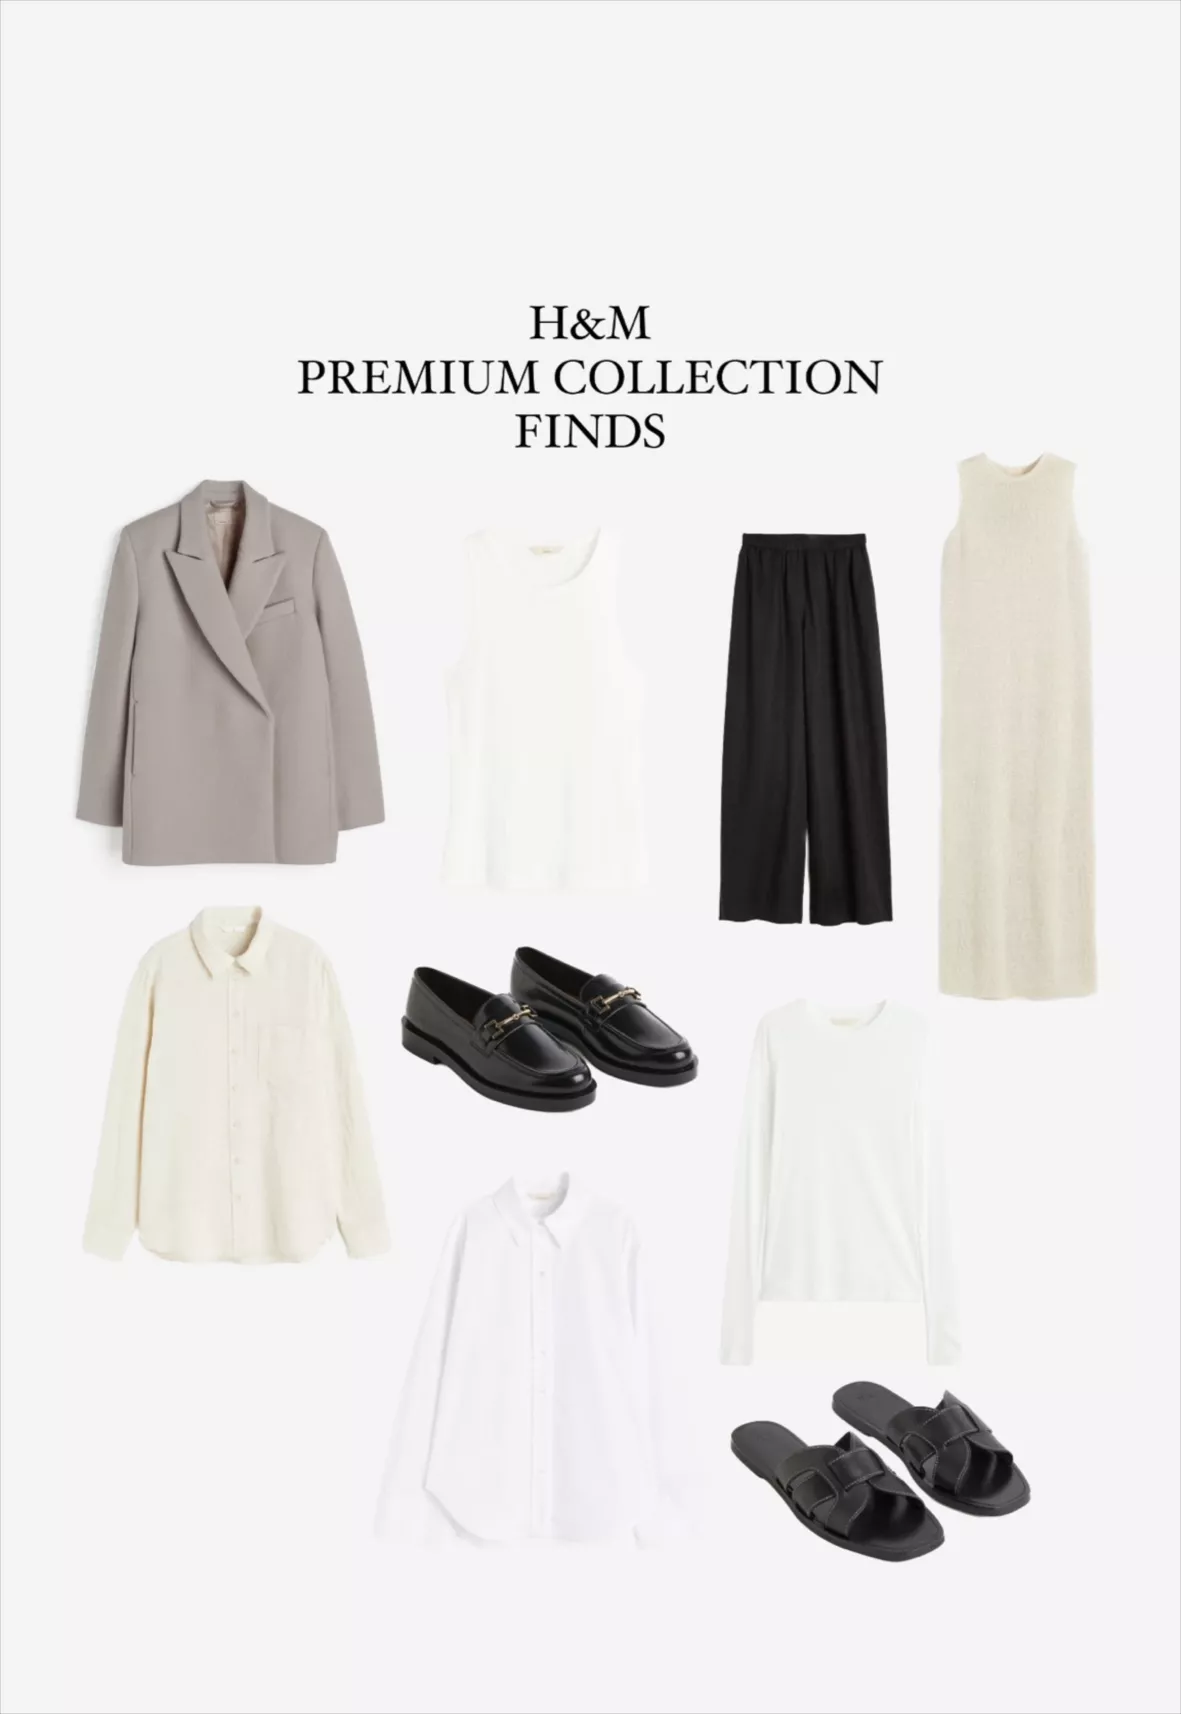 H&M PREMIUM SELECTION